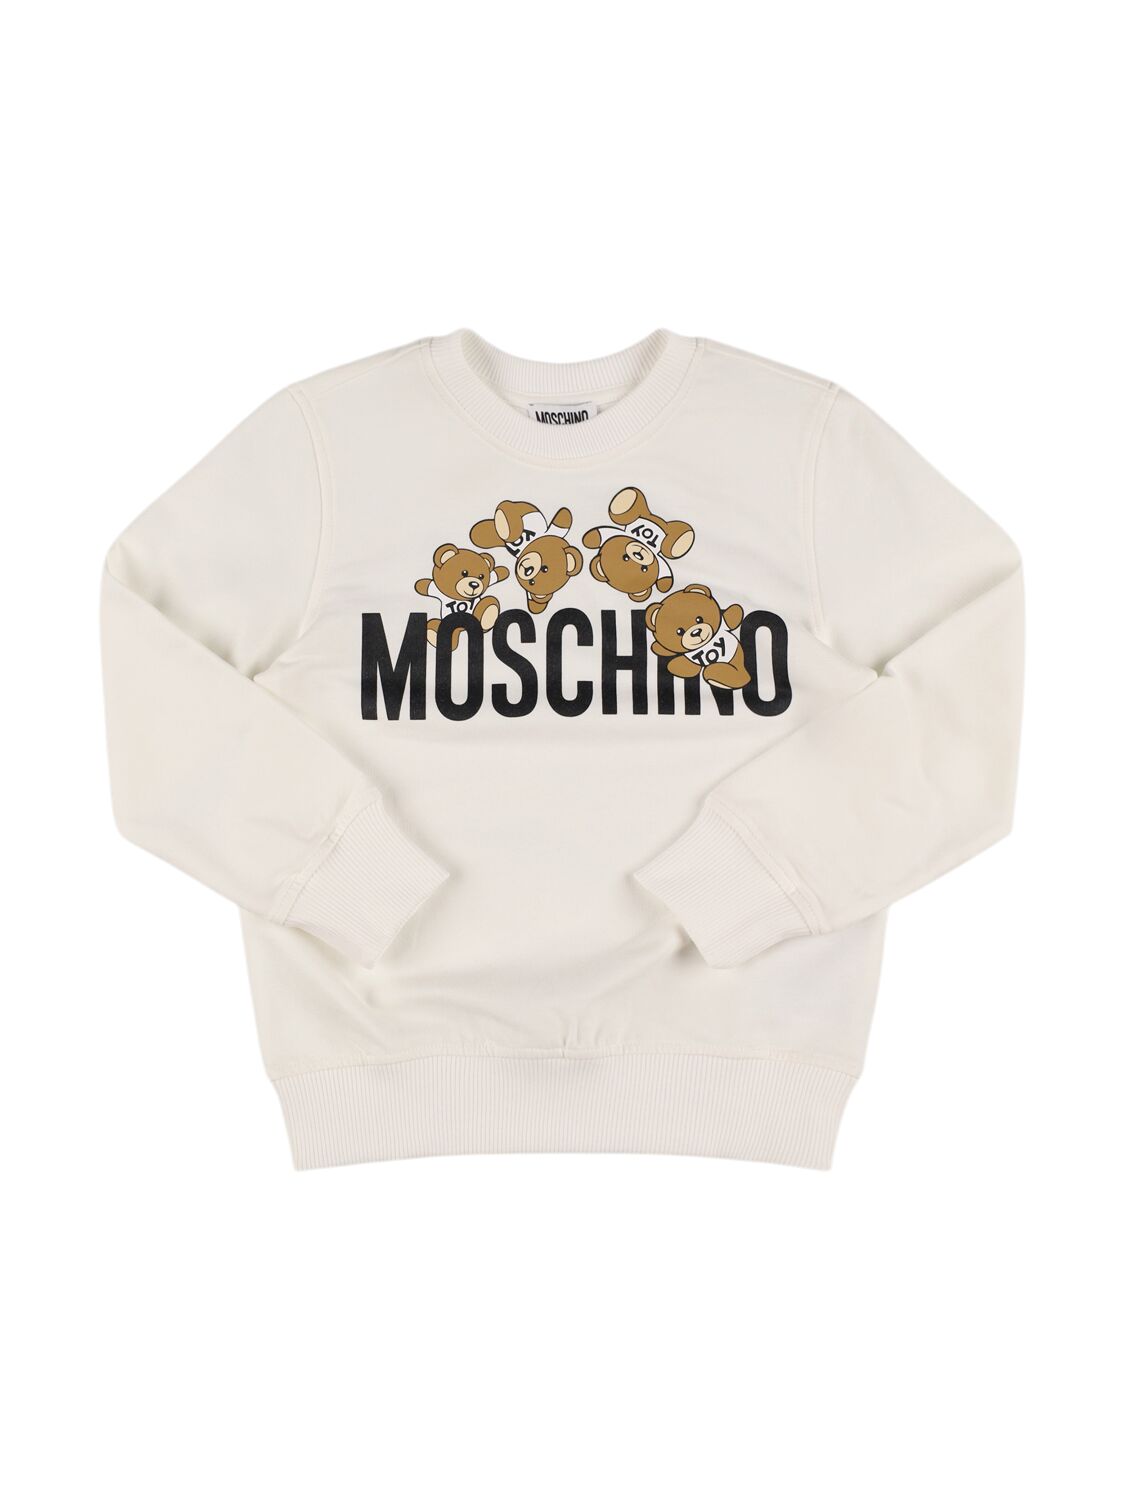 Moschino Kids' Cotton Crewneck Sweatshirt In White